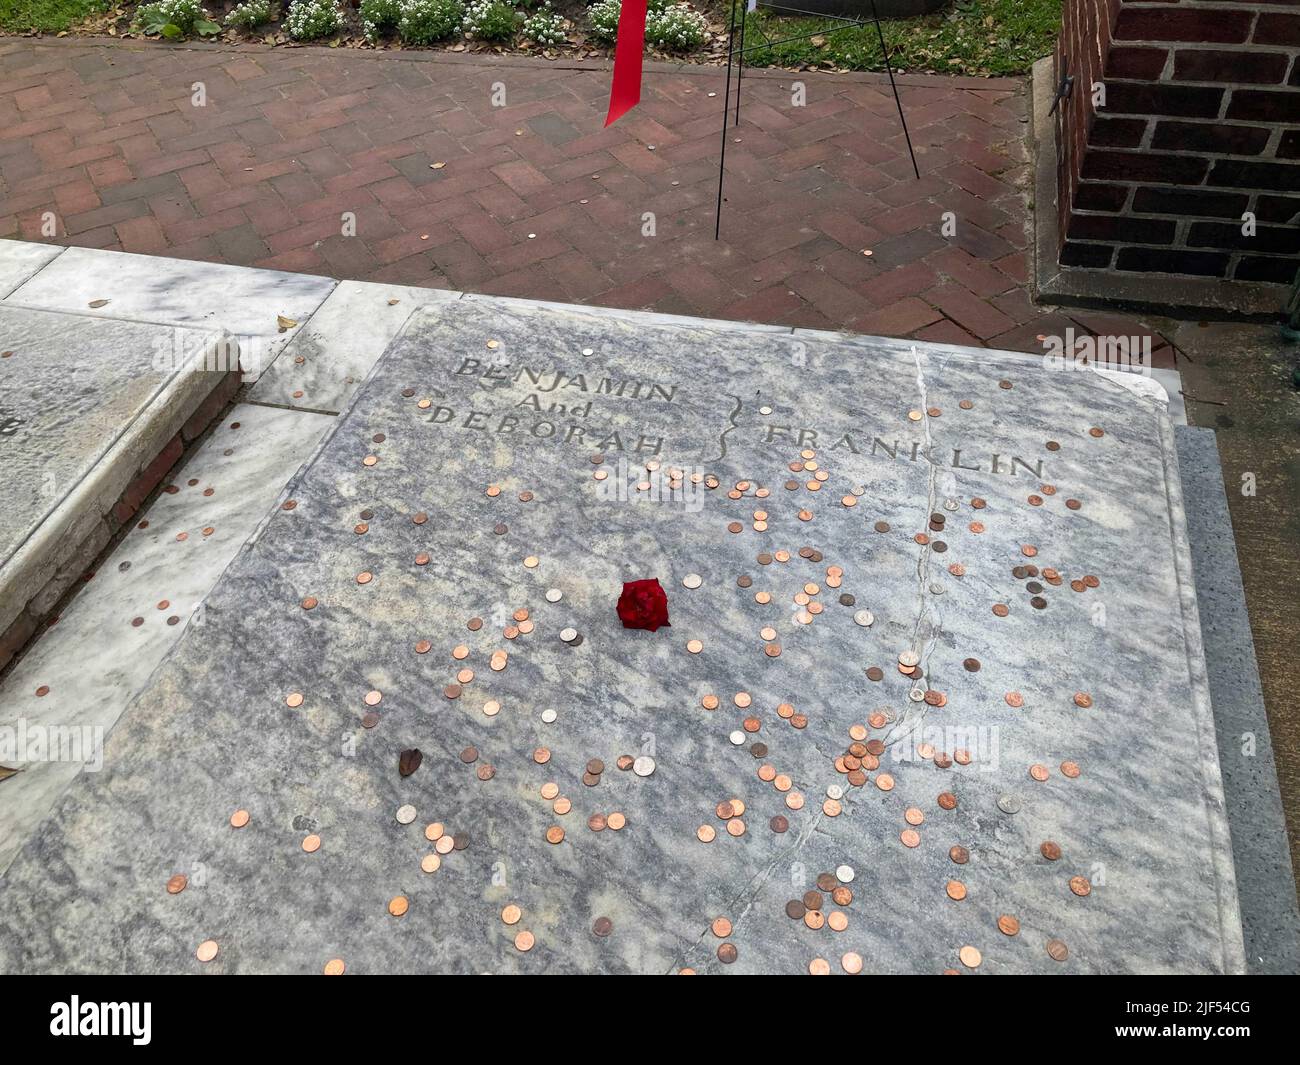 Ben Franklin Grave Site, Philadelphia, Pennsylvania, USA Stock Photo